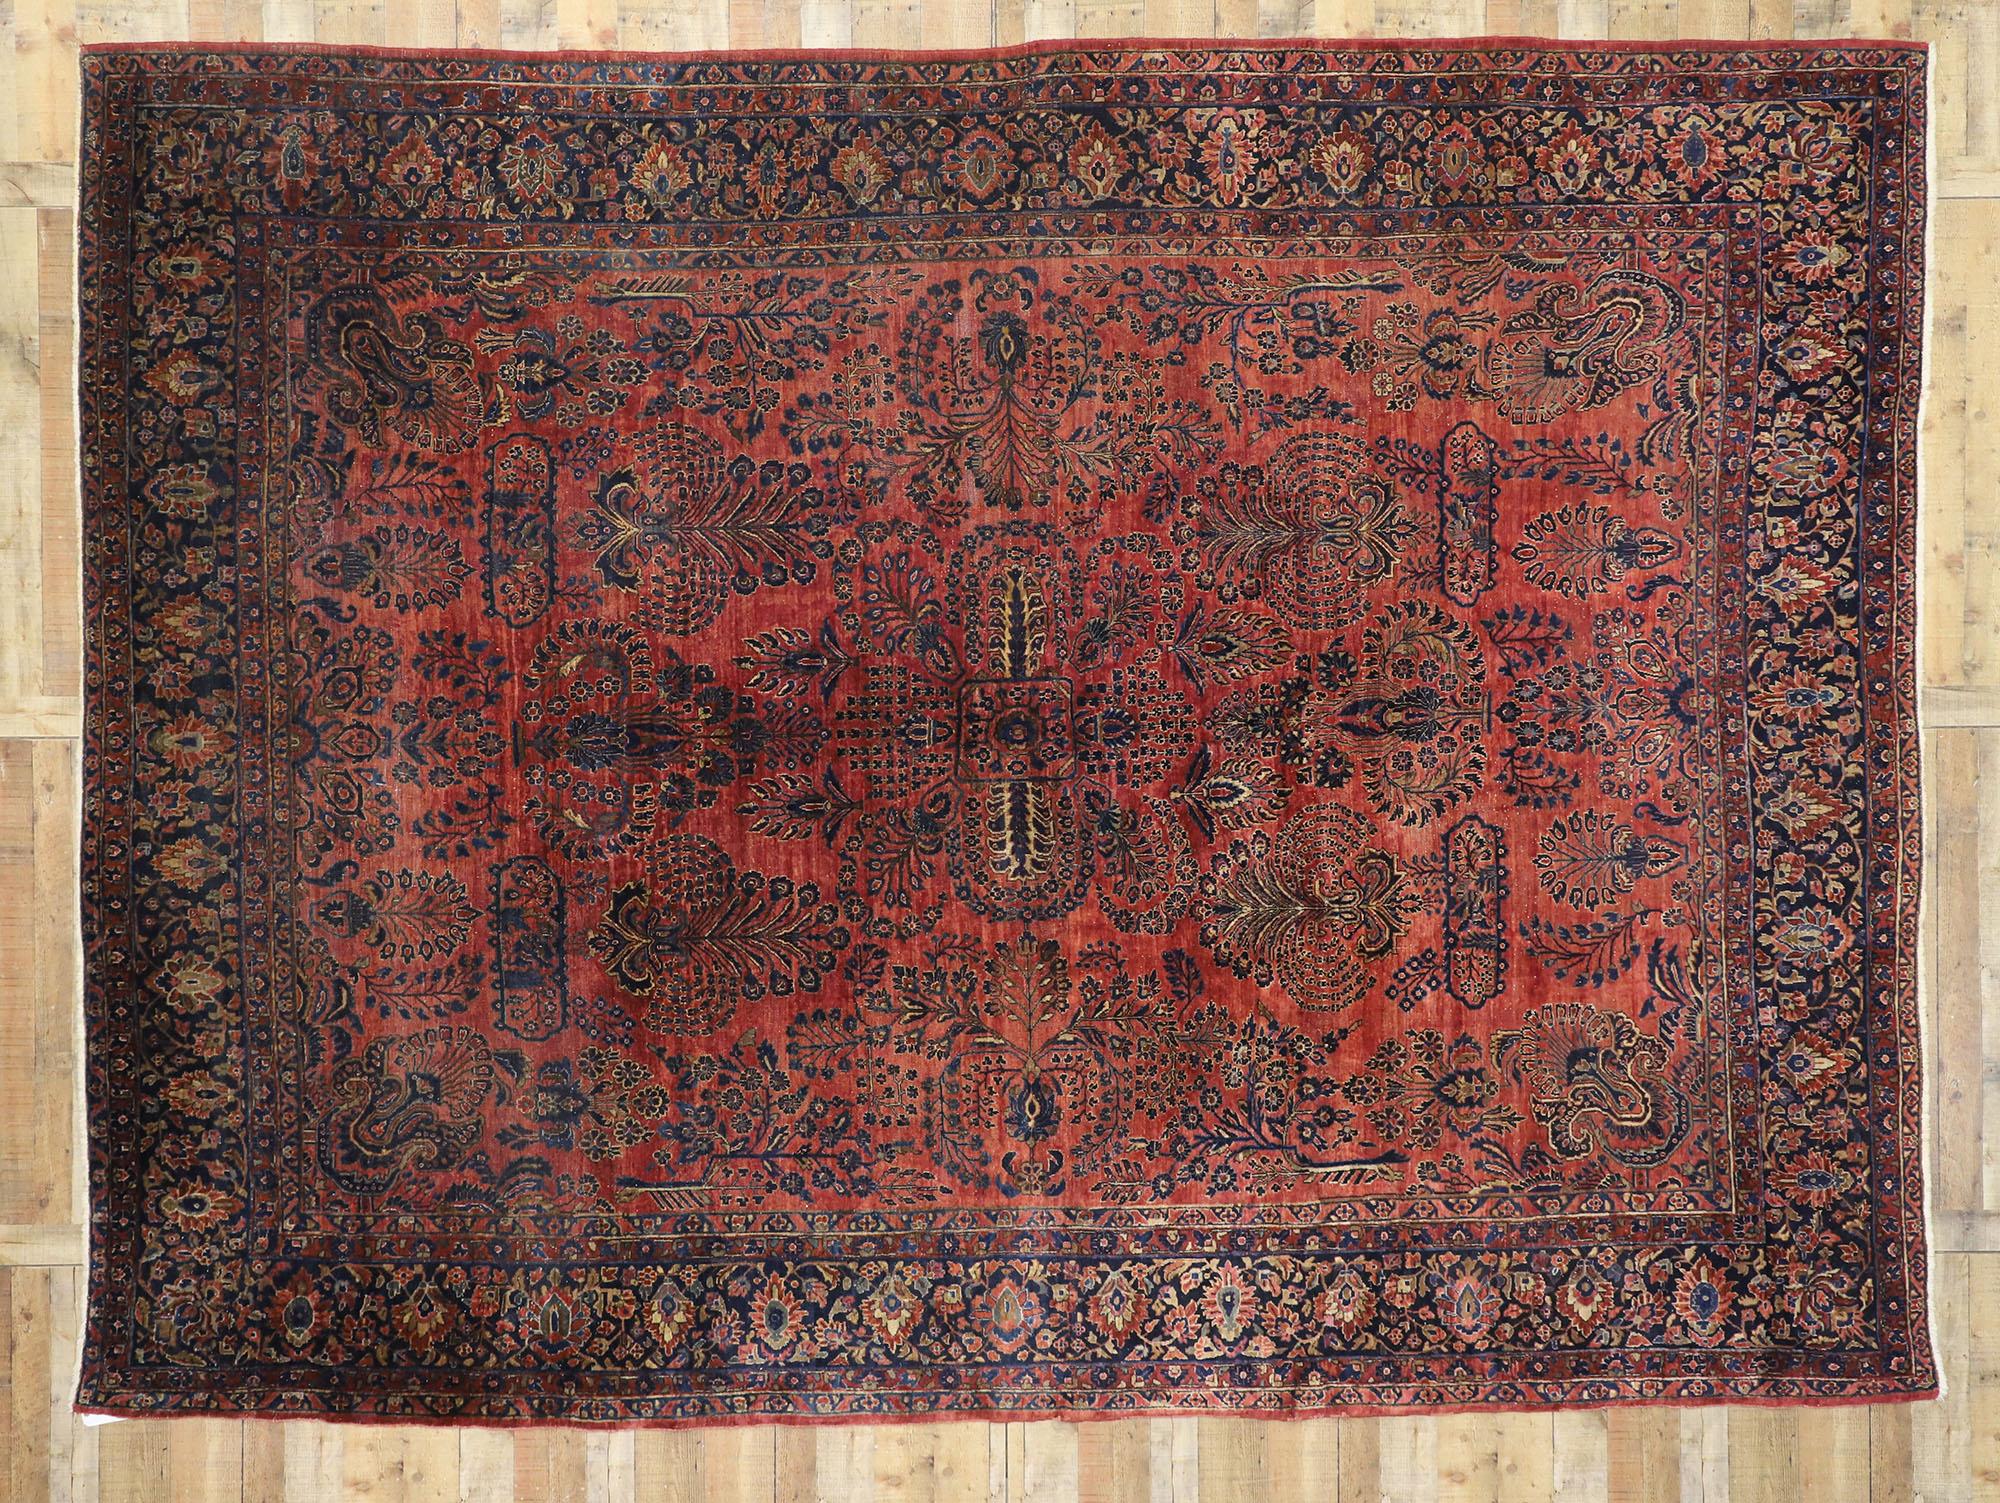 20th Century Distressed Antique Persian Sarouk Area Rug with Modern English Tudor Style